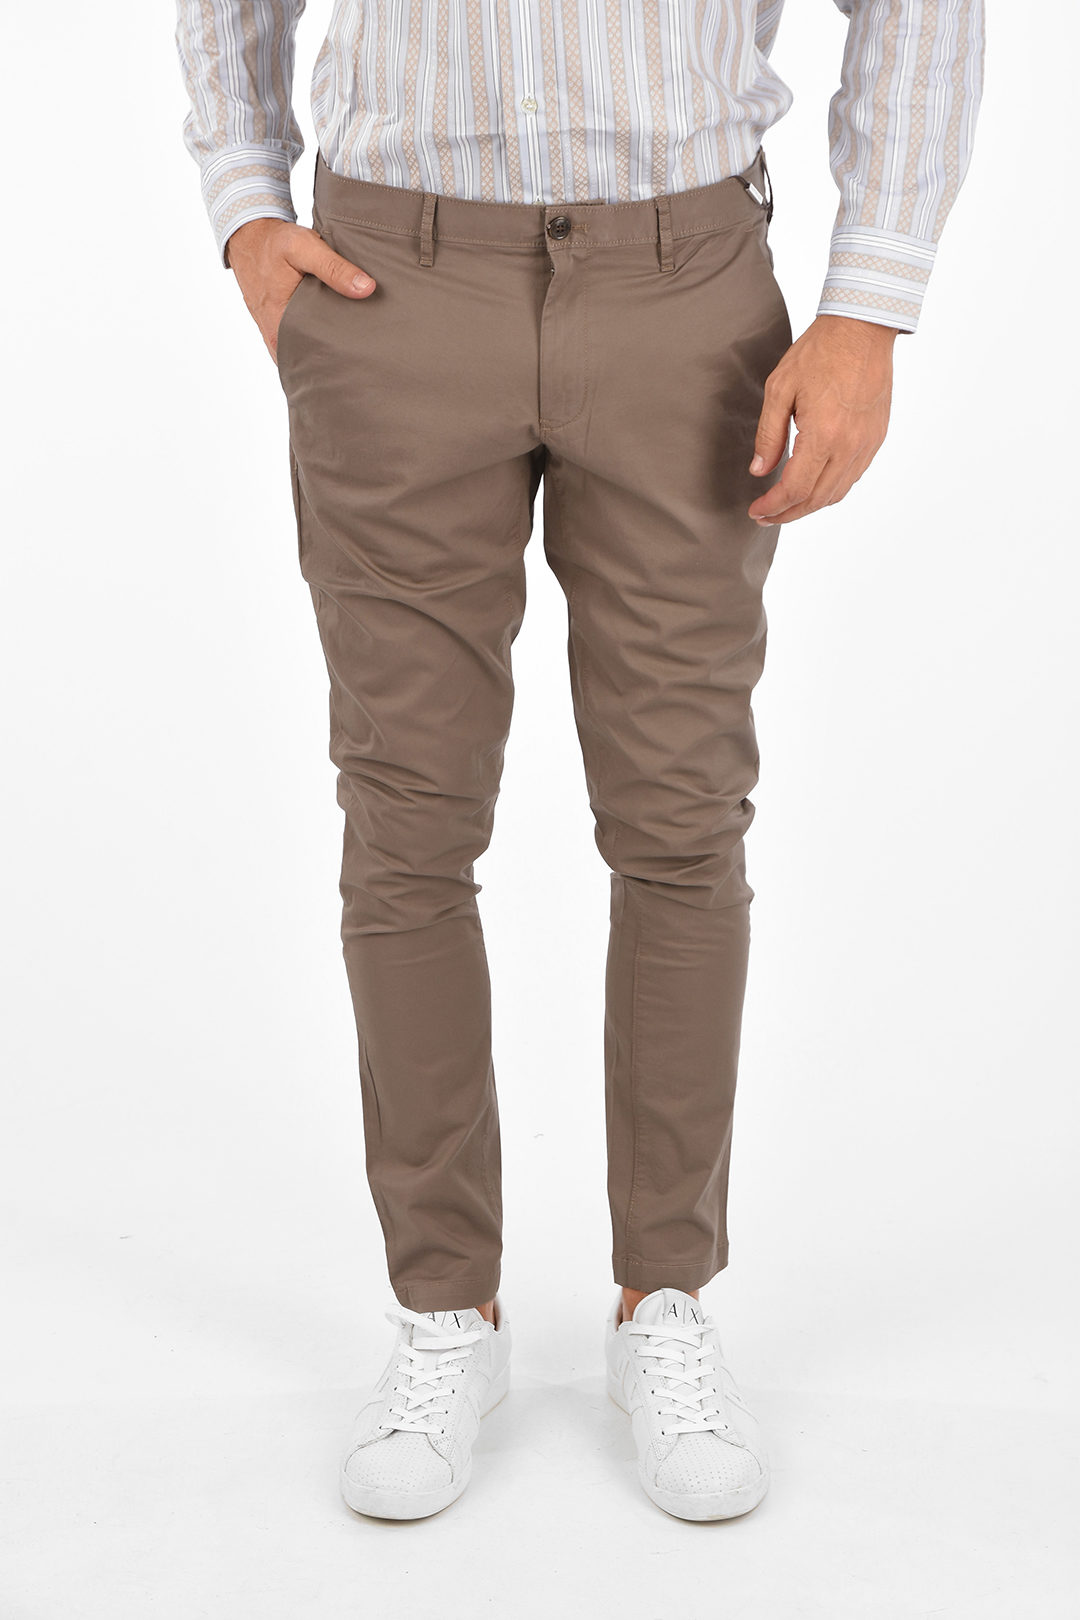 Michael Kors Stretchy Cotton Skinny Fit Pants men - Glamood Outlet